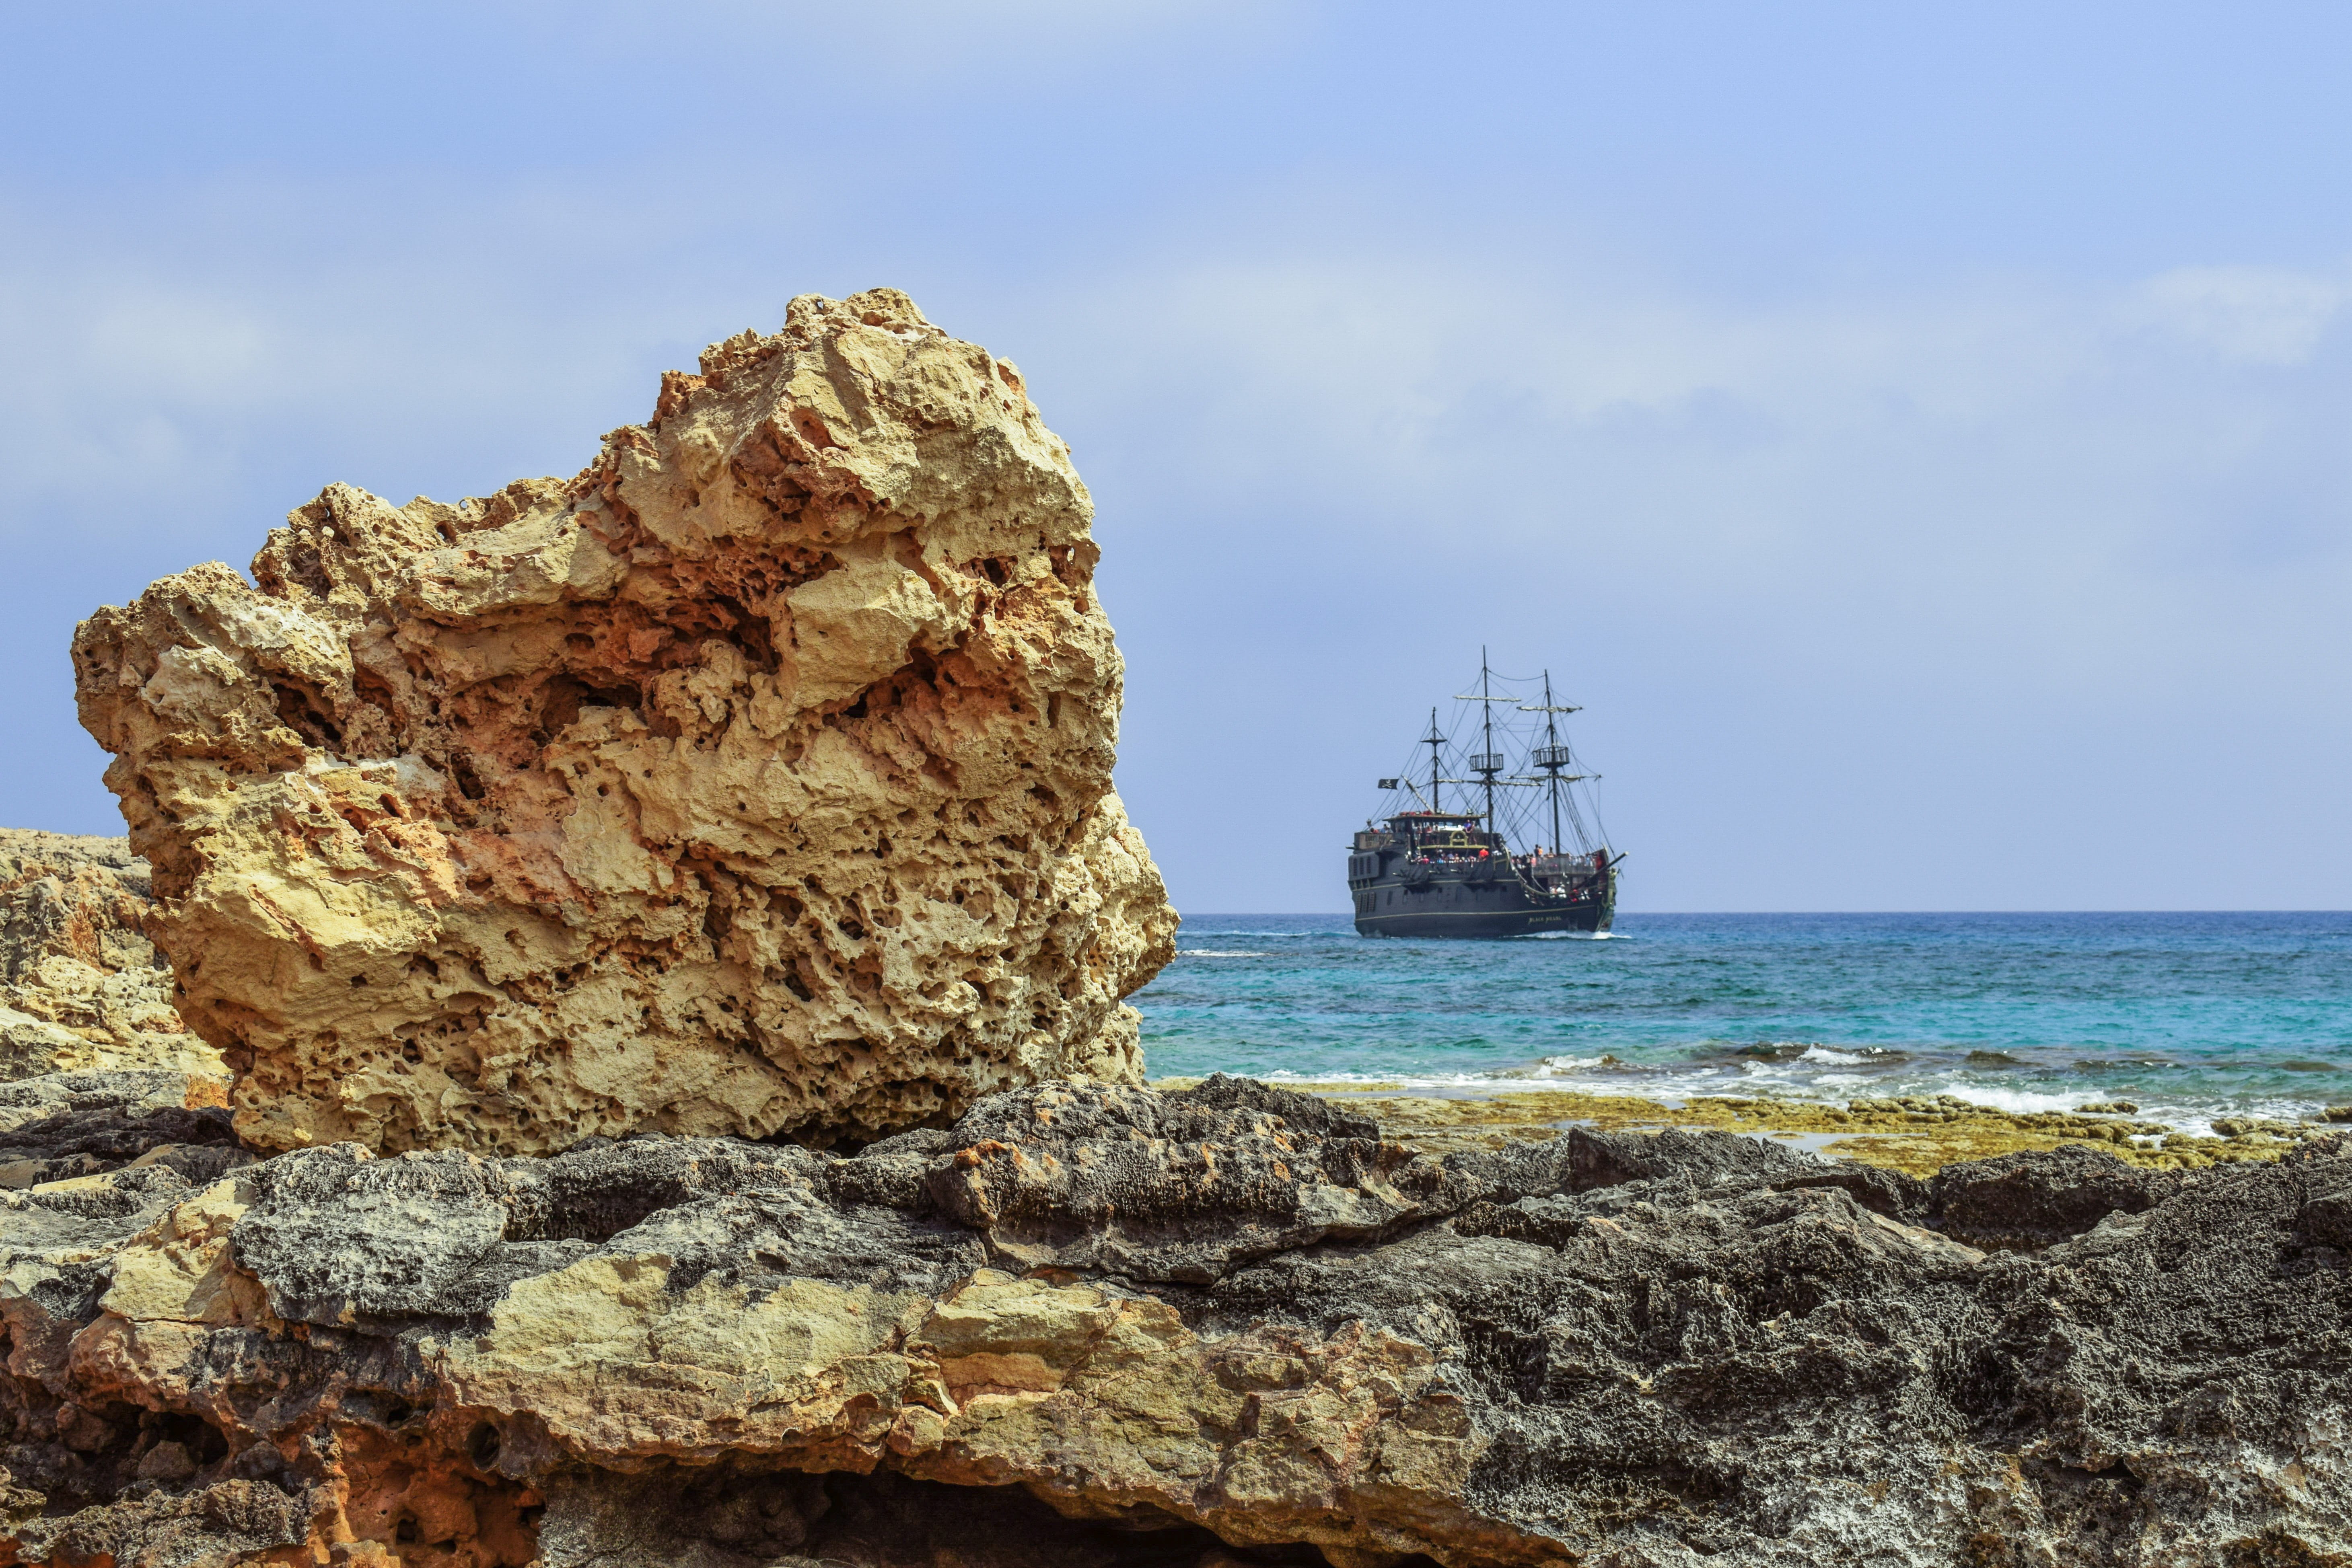 Rock, Landscape, rocky coast, pirate ship, sailboat, sea, cruise ship